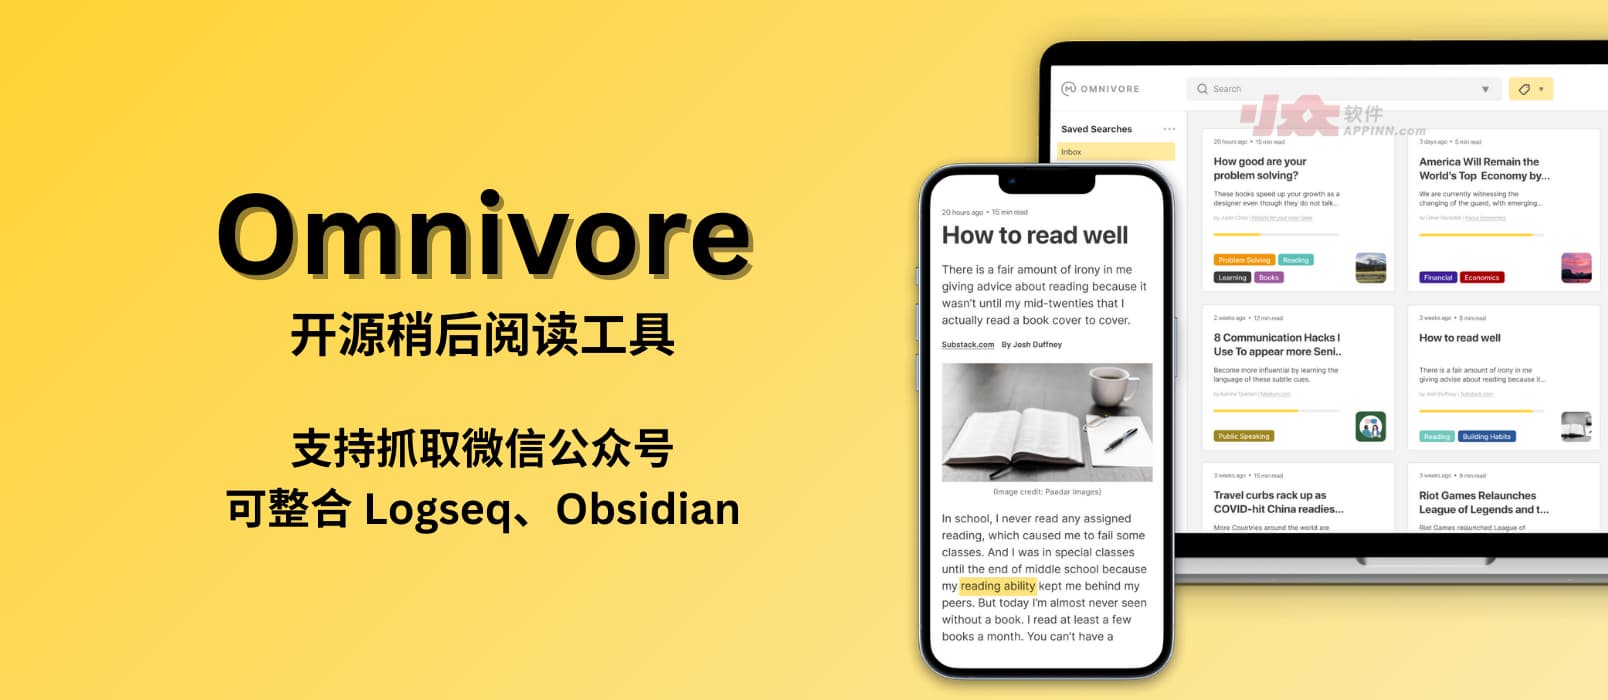 Omnivore – 开源稍后阅读工具，可跨设备同步阅读进度，支持抓取微信公众号，可整合 Logseq、Obsidian